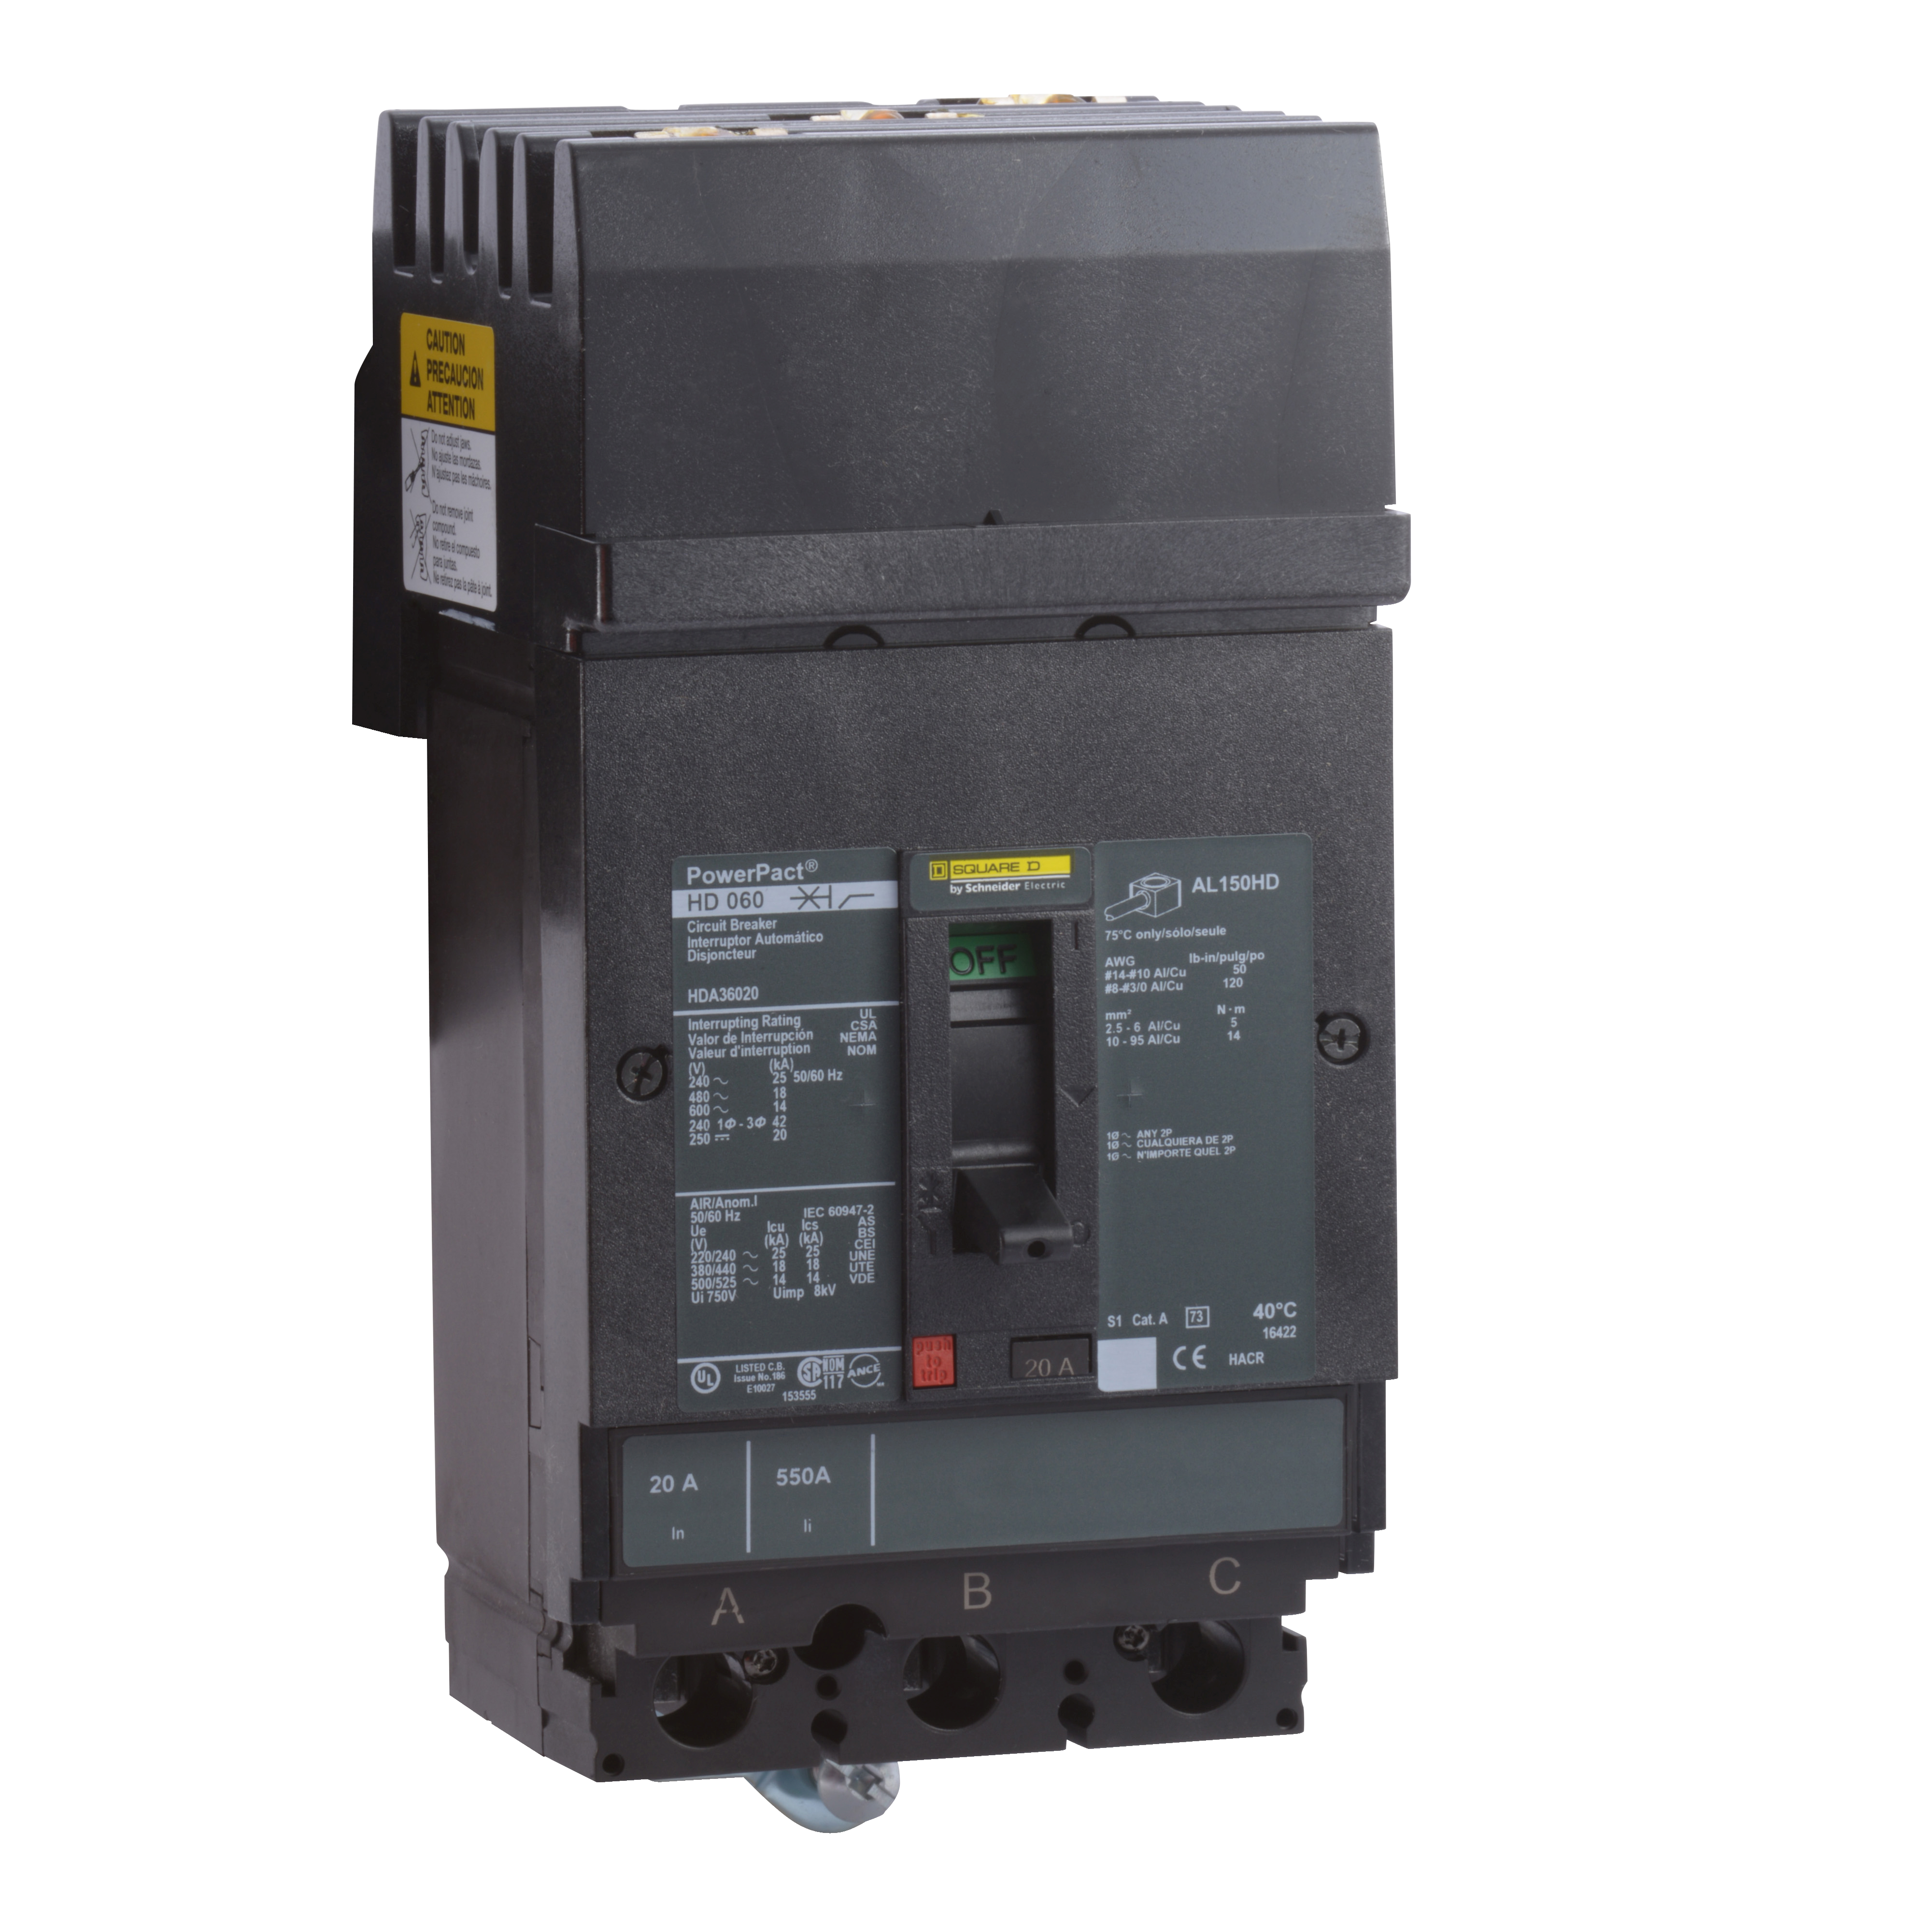 Circuit breaker, PowerPacT H, 125A, 3 pole, 600VAC, 14kA, I-Line, thermal magnetic, 80%, shunt, ABC